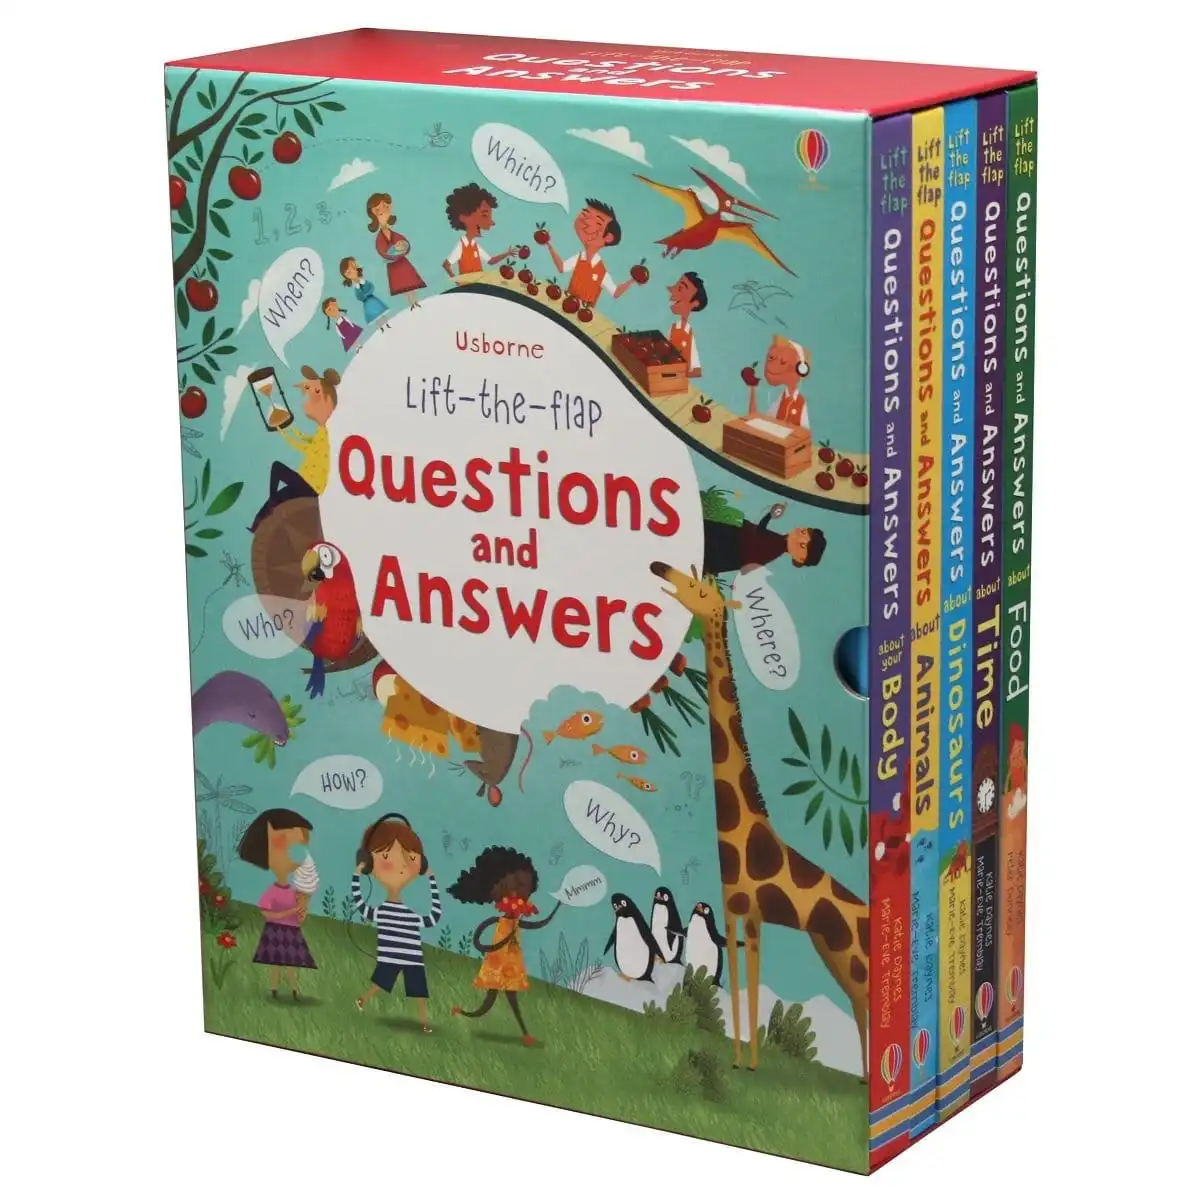 Lift-the-flap Questions & Answers - 5 Copy Box Set